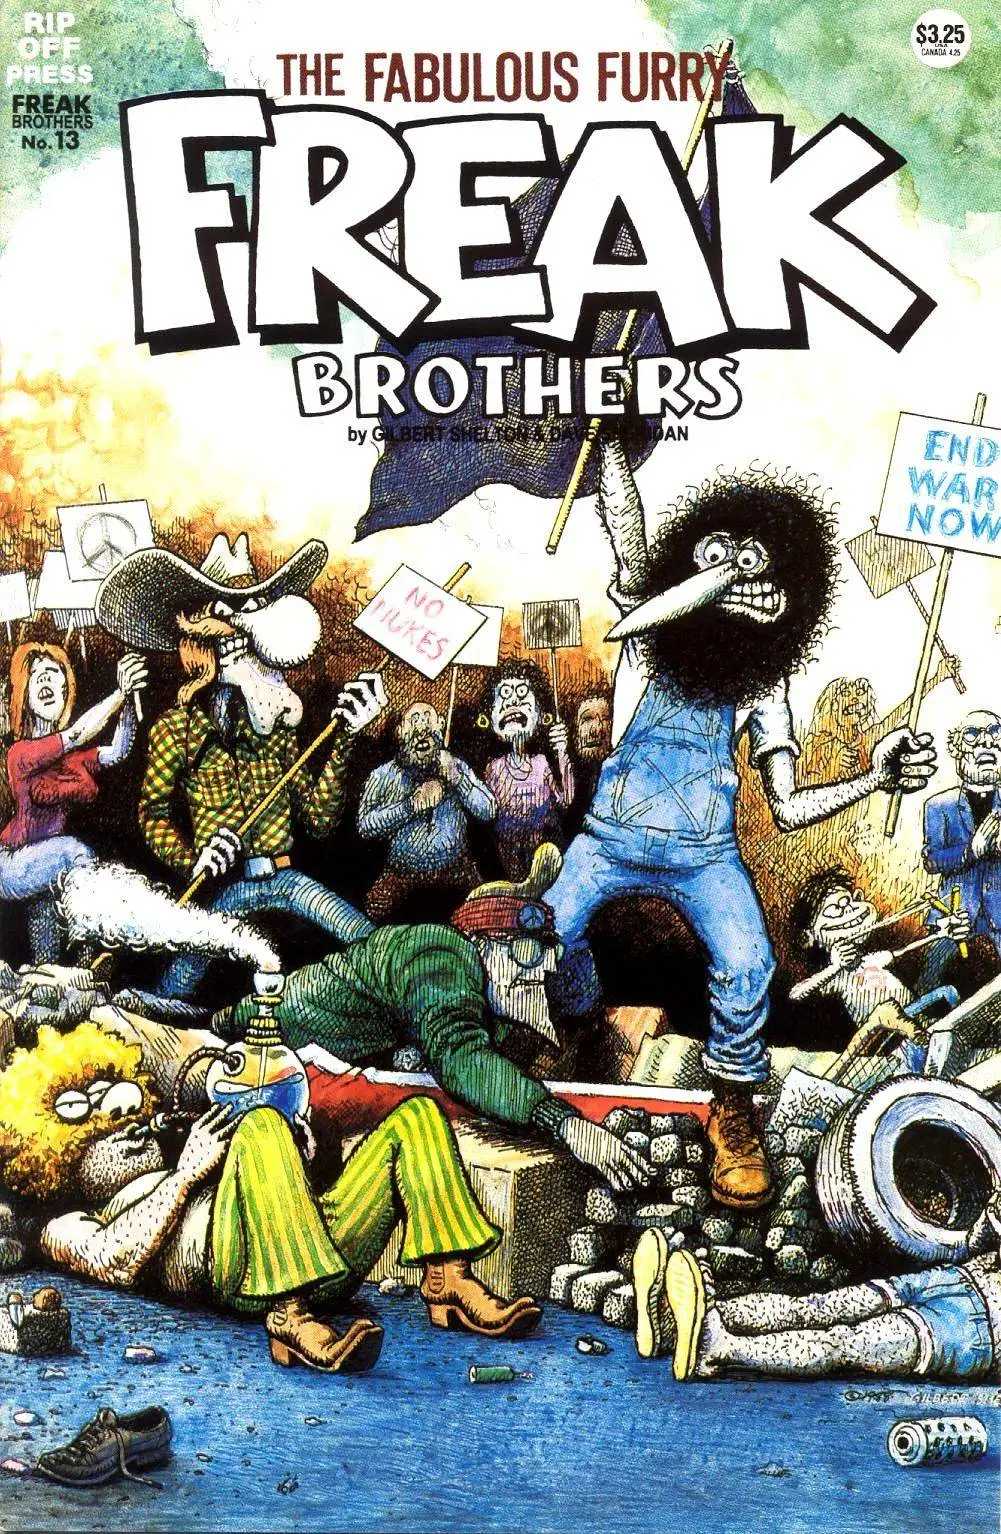 Fabulous Furry Freak Brothers 013 (1997)